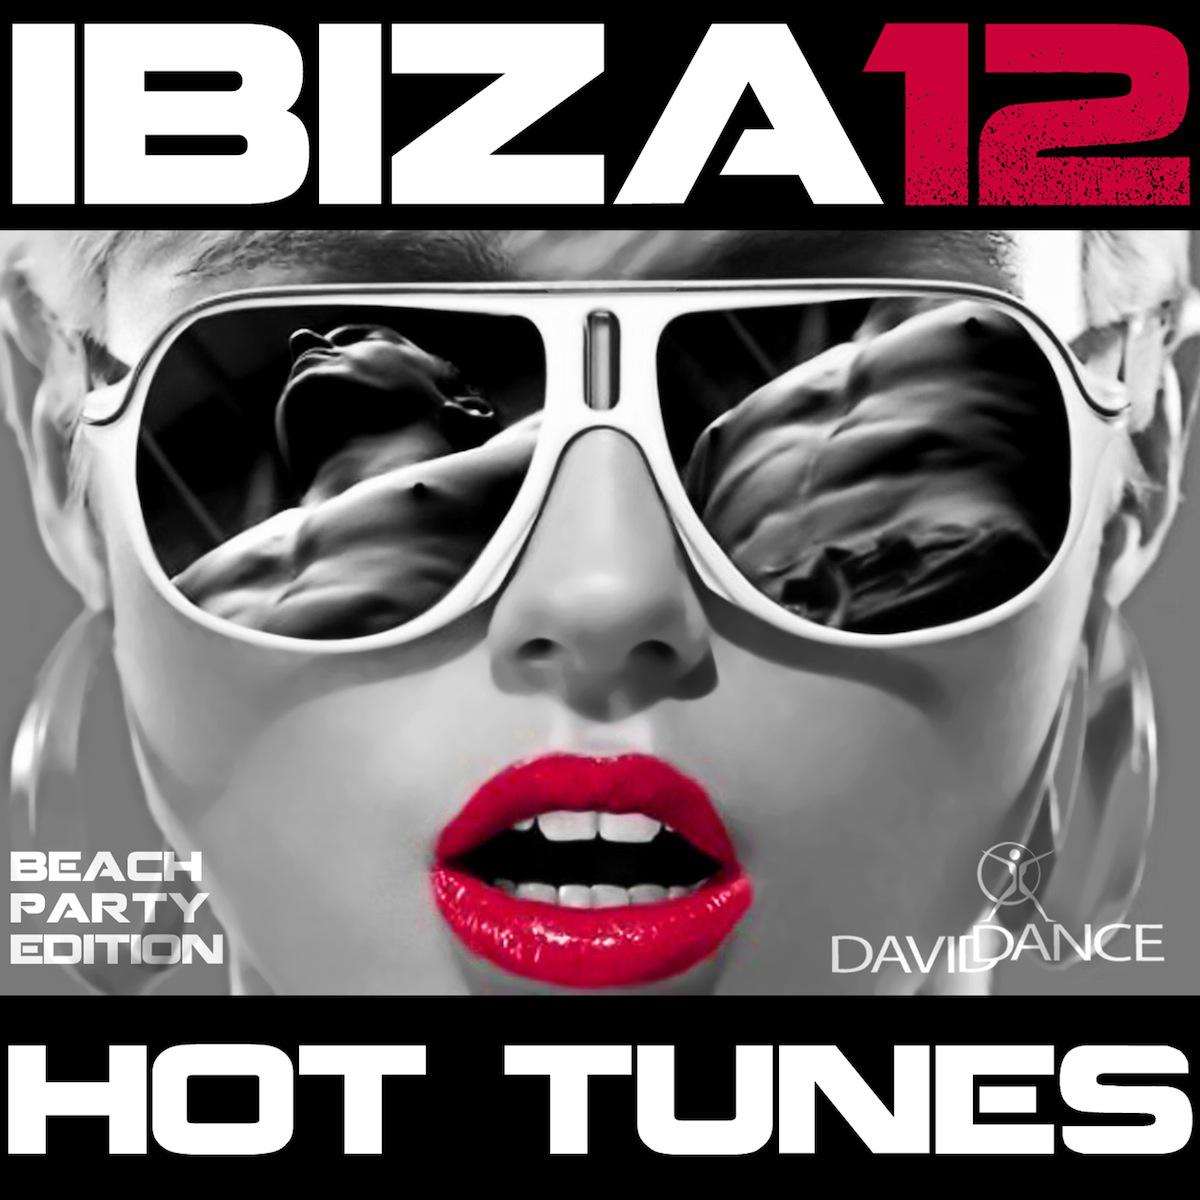 Ibiza 2012 Hot Tunes, Beach Party Edition